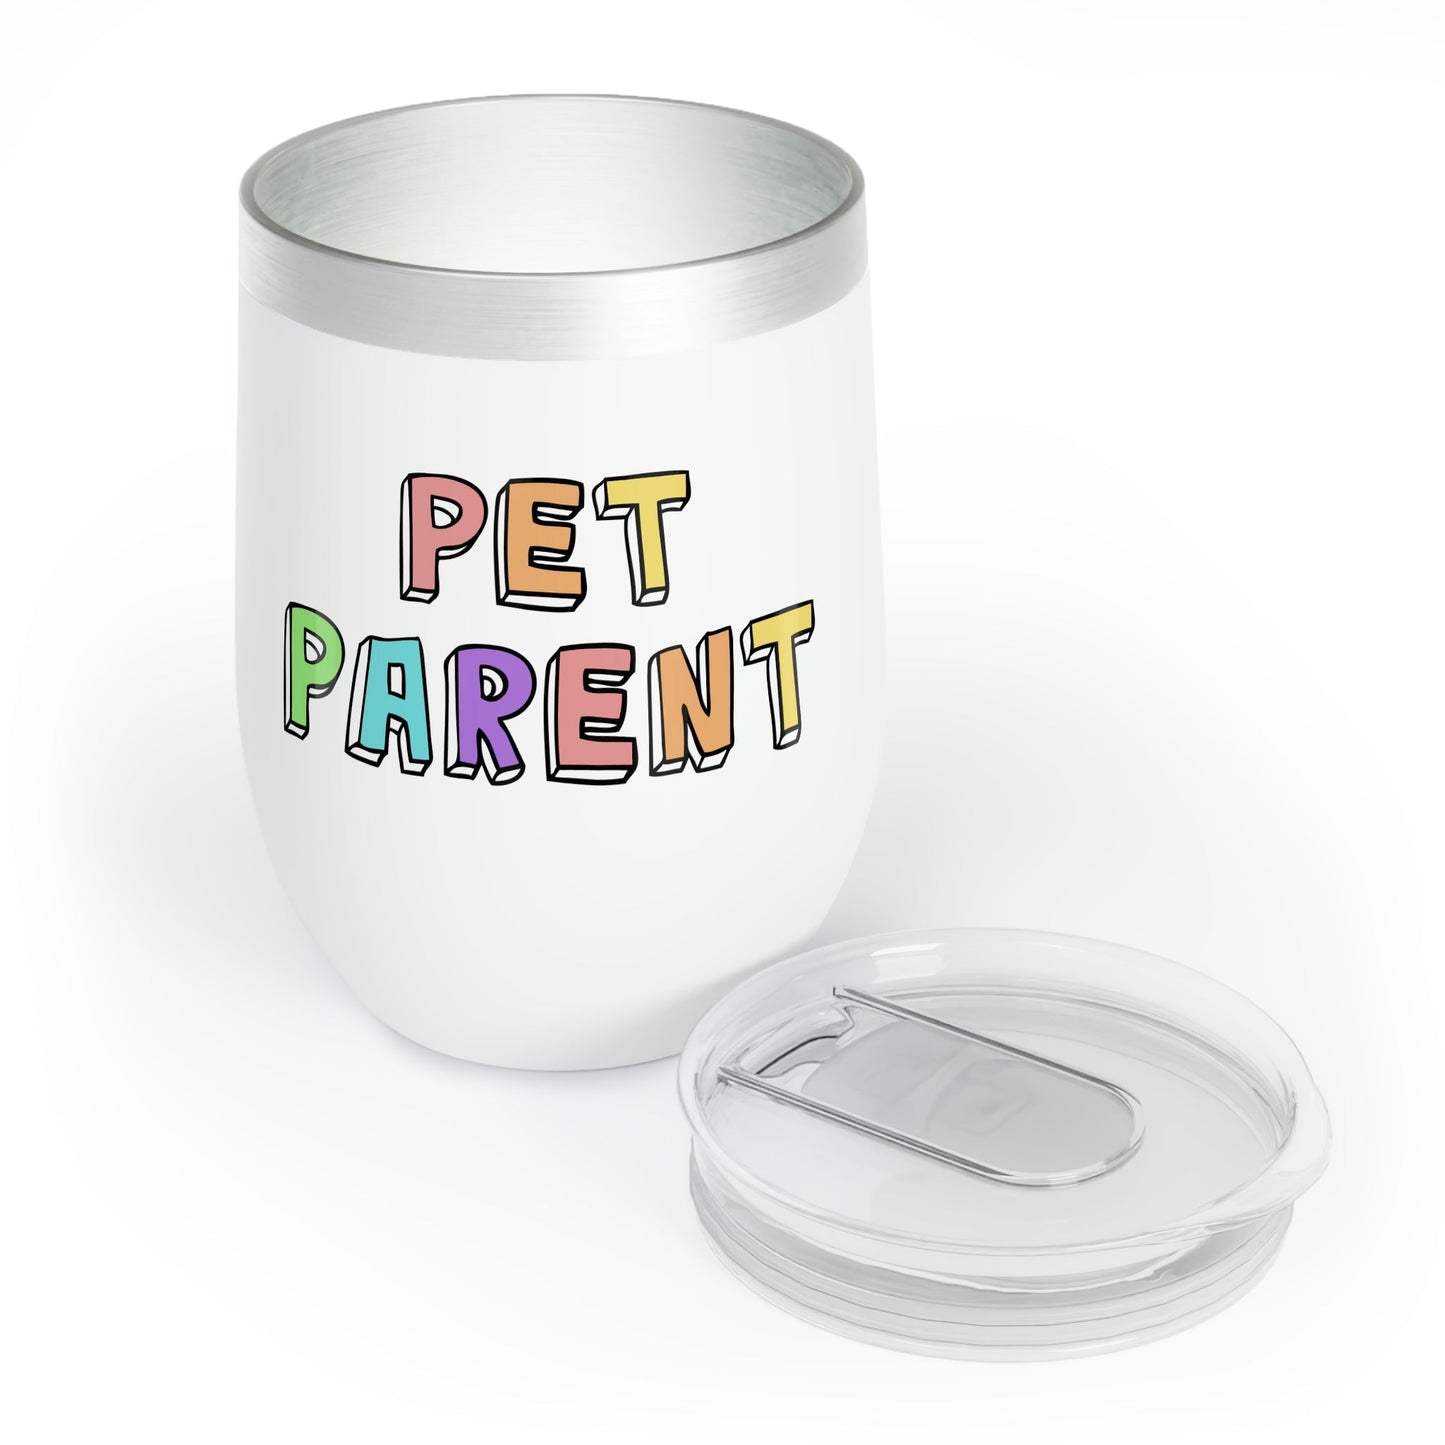 Pet Parent | Wine Tumbler - Detezi Designs-76343267335640054291